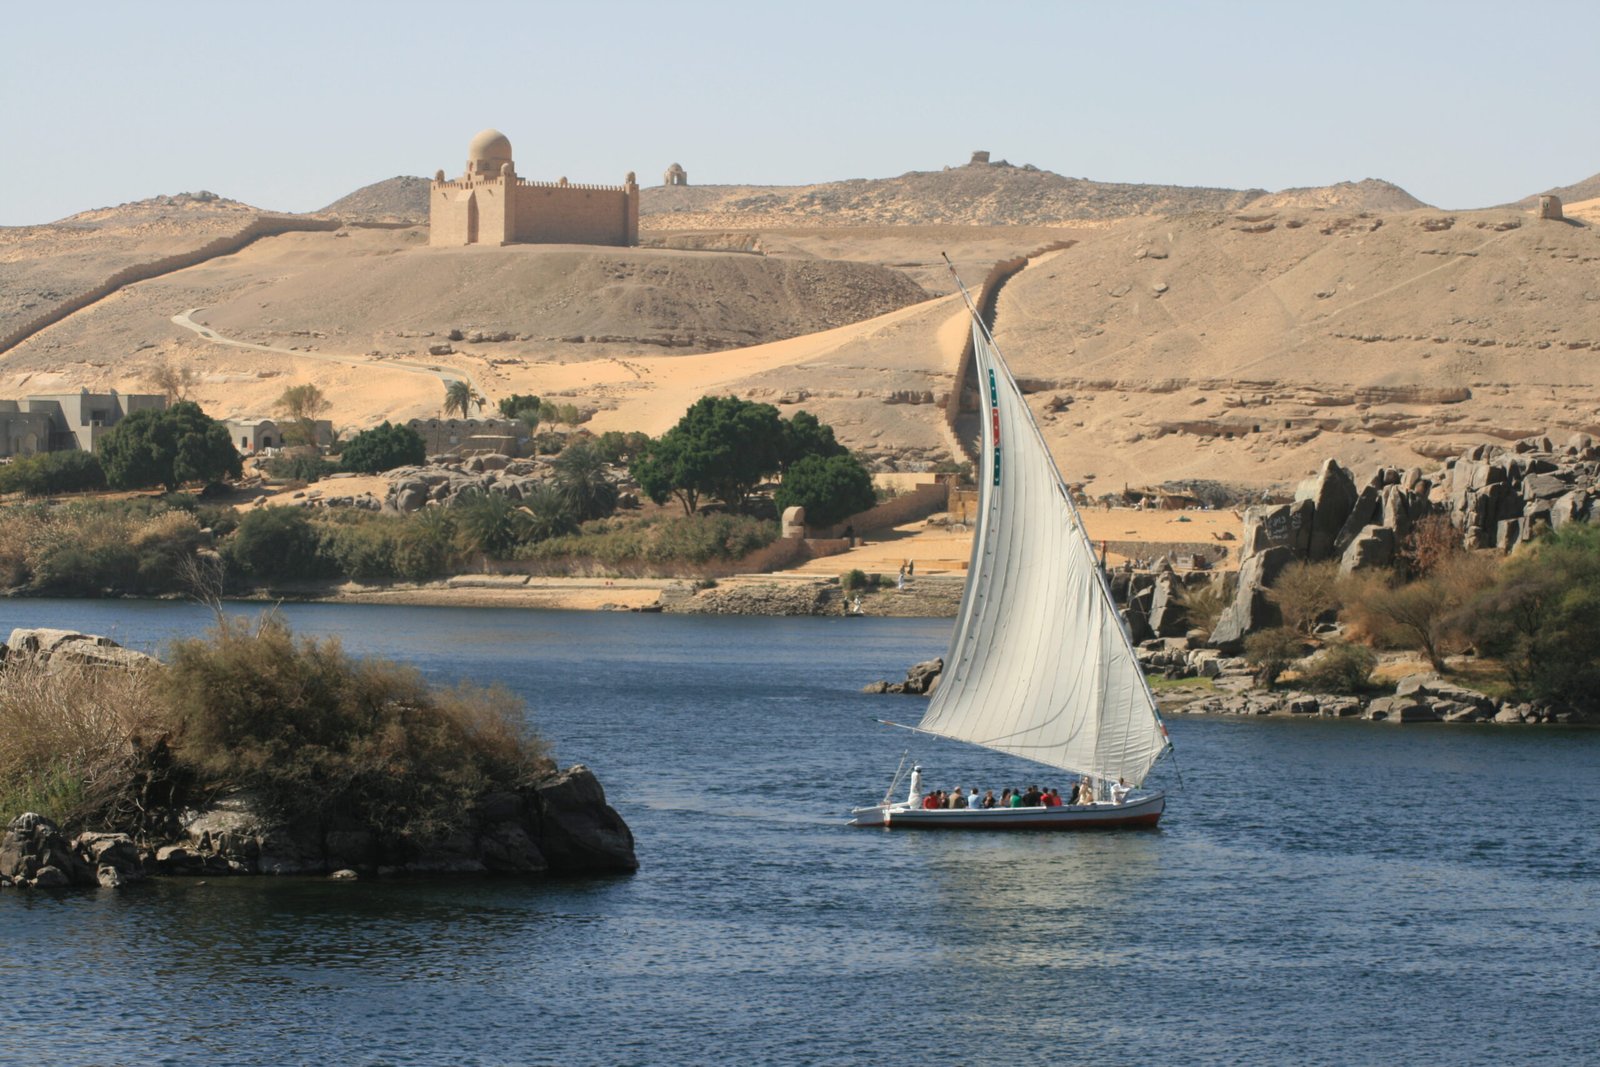 Nile Cruise - Classic Ancient Egypt Tour